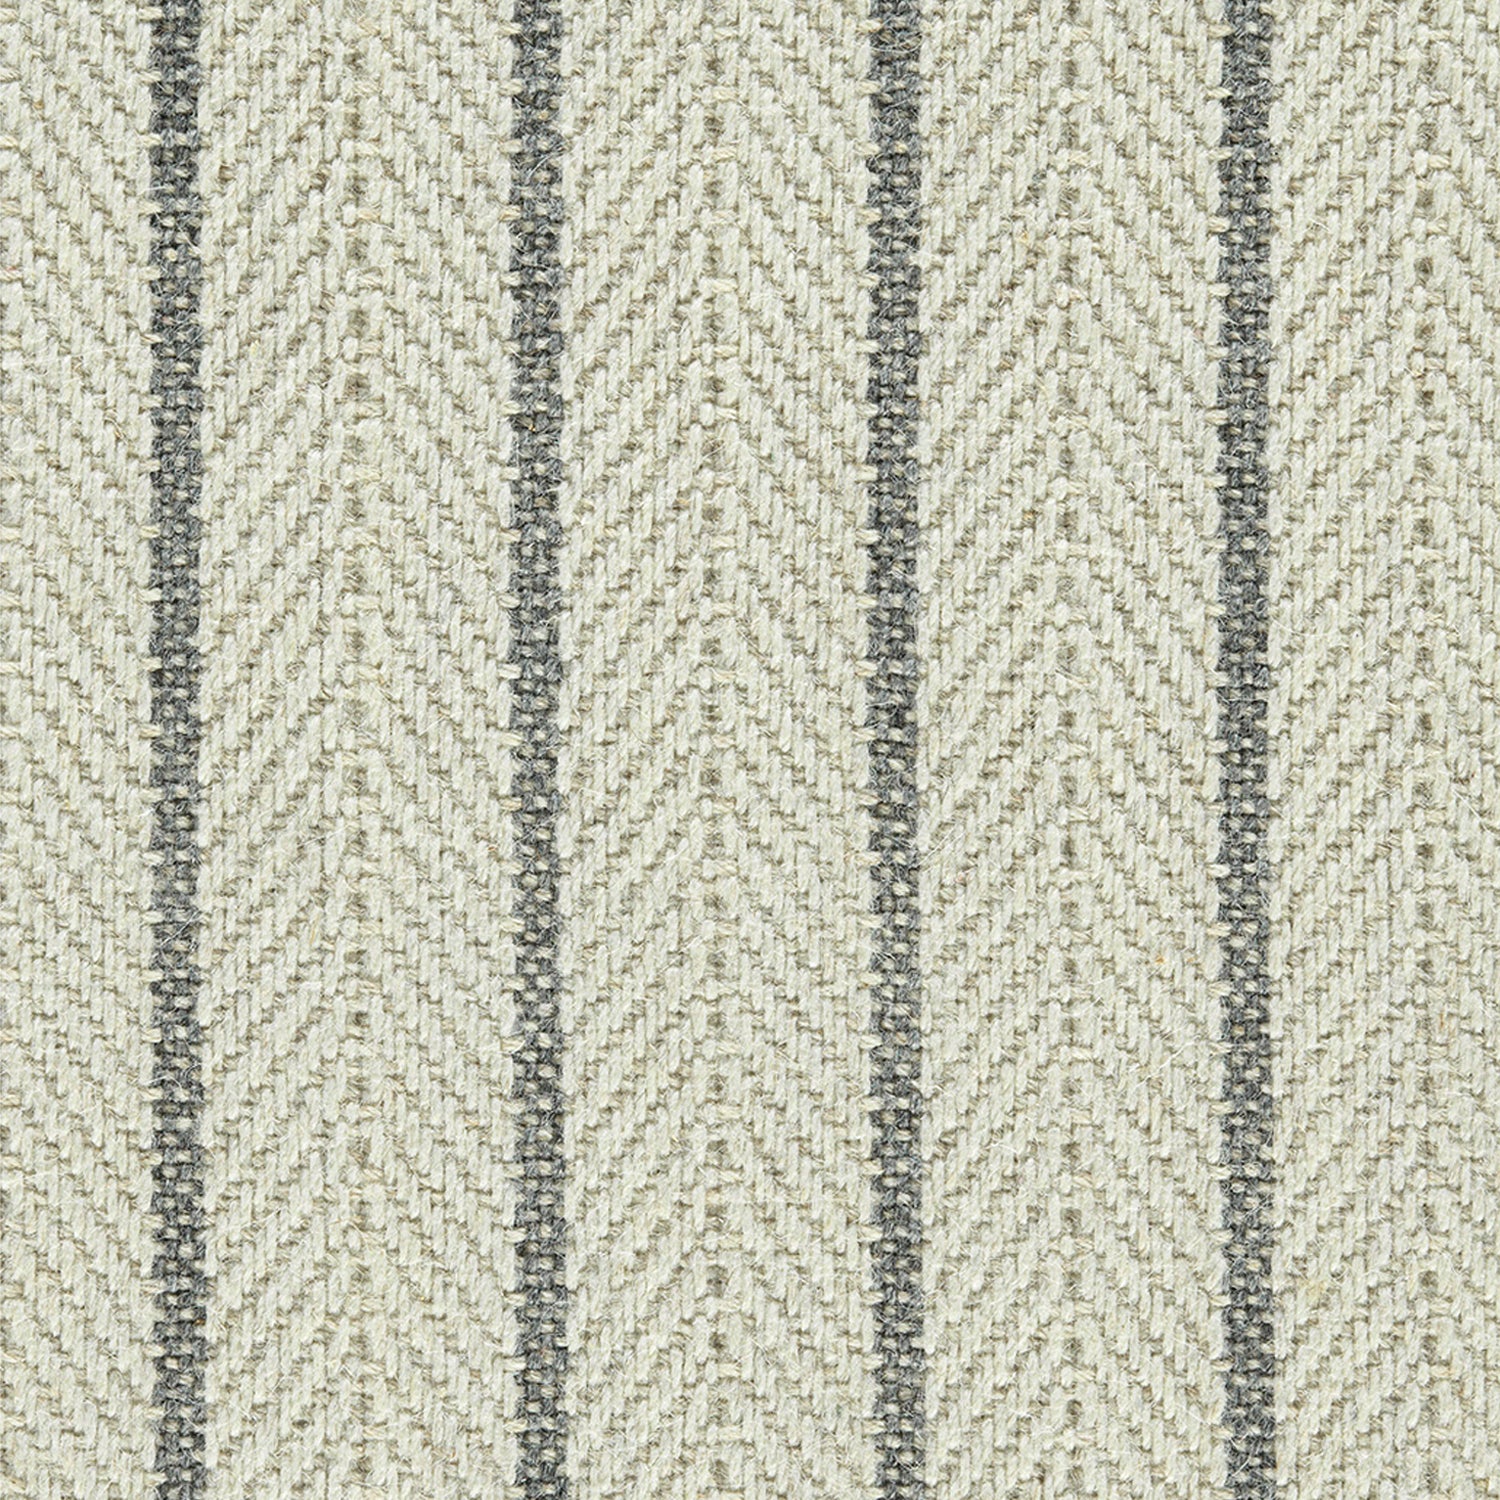 Wool broadloom carpet swatch in a striped herringbone weave in white, tan and gray.